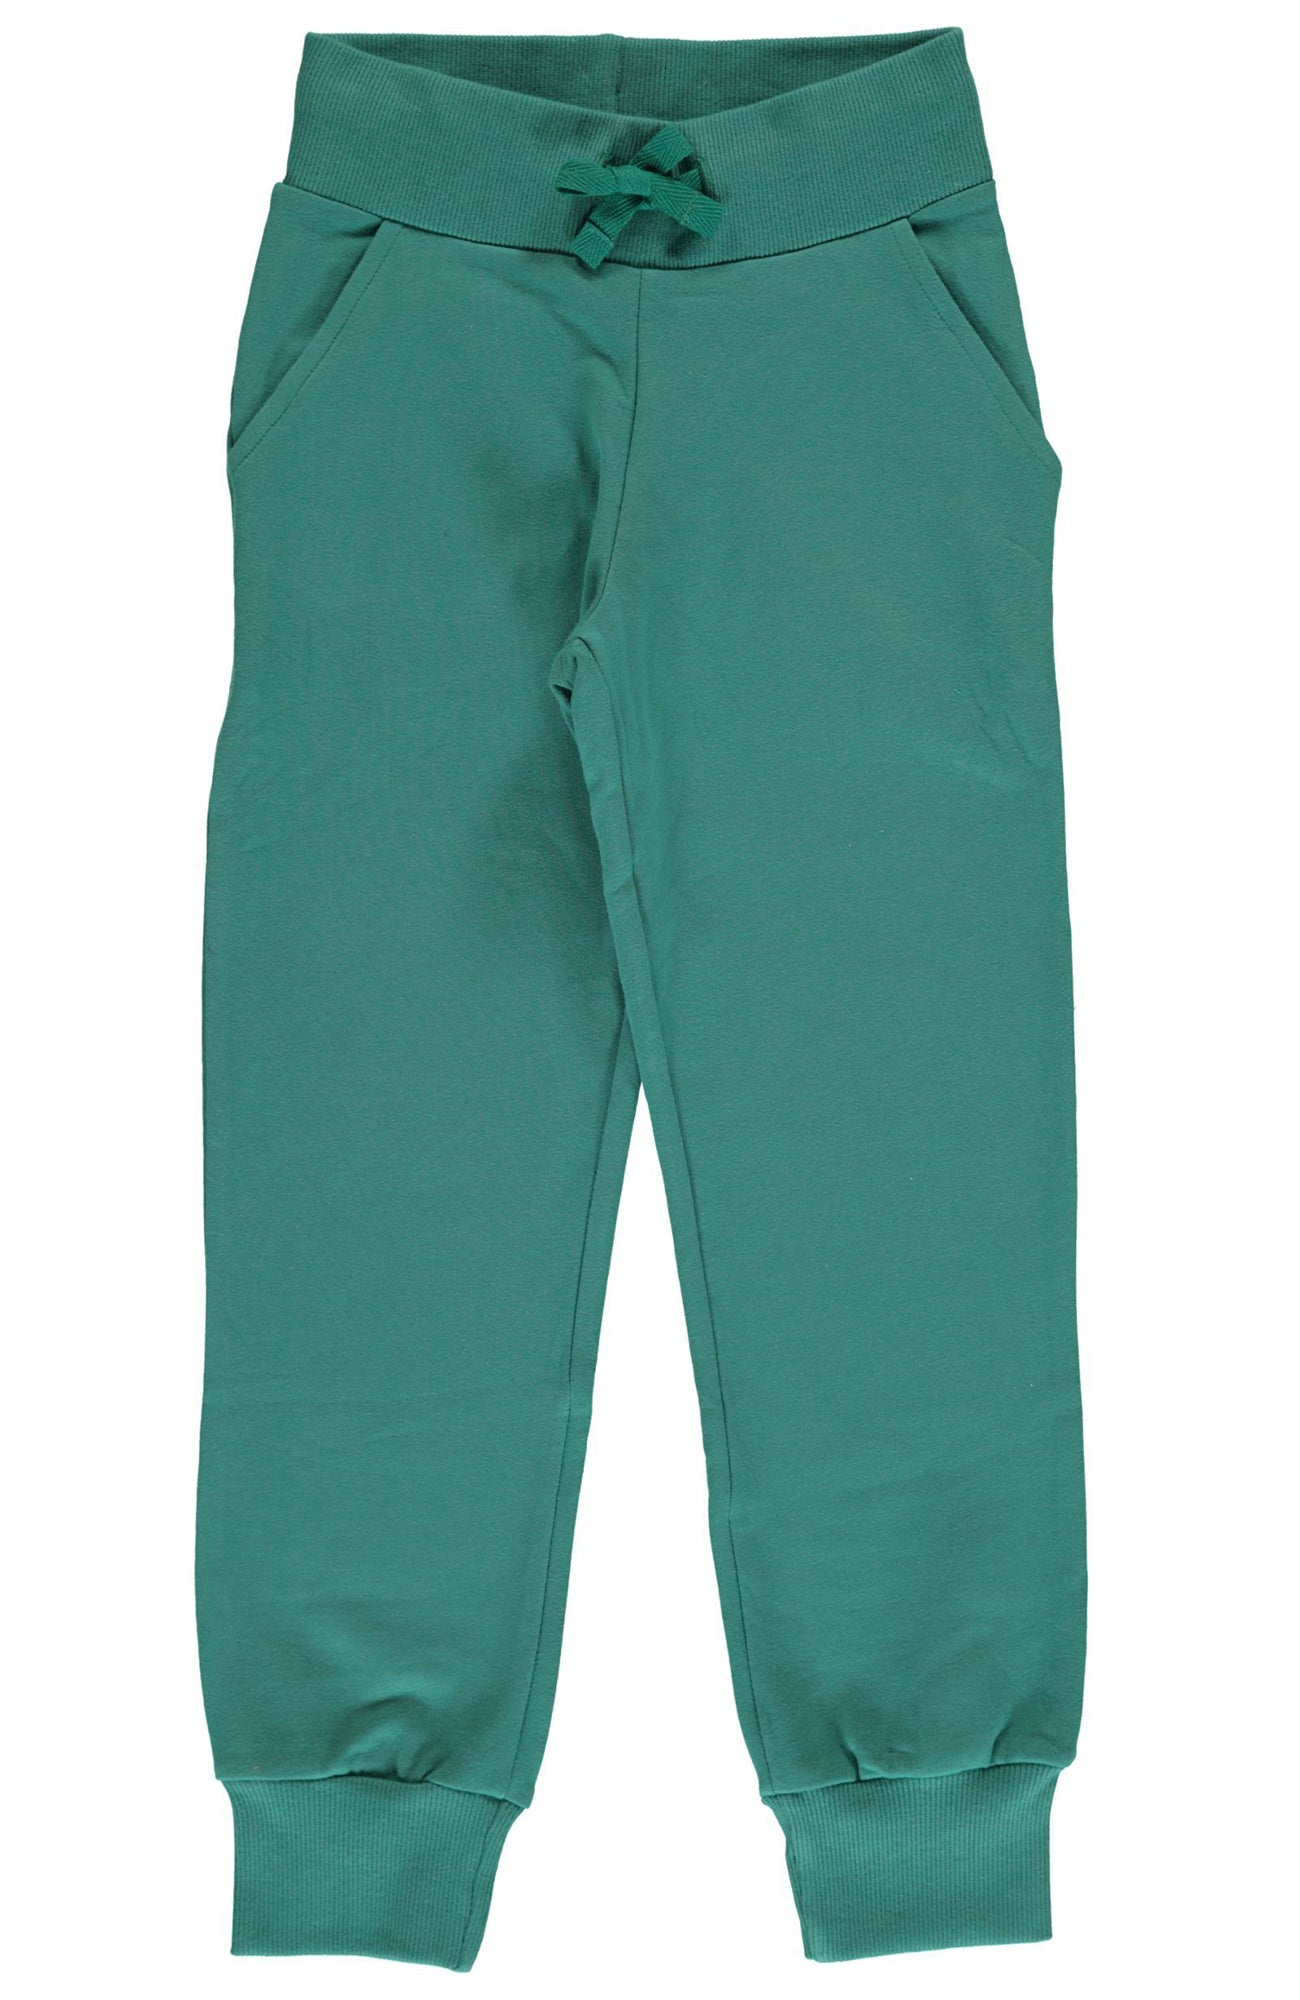 Children's Green Petrol Sweatpants - Maxomorra (Last Available)